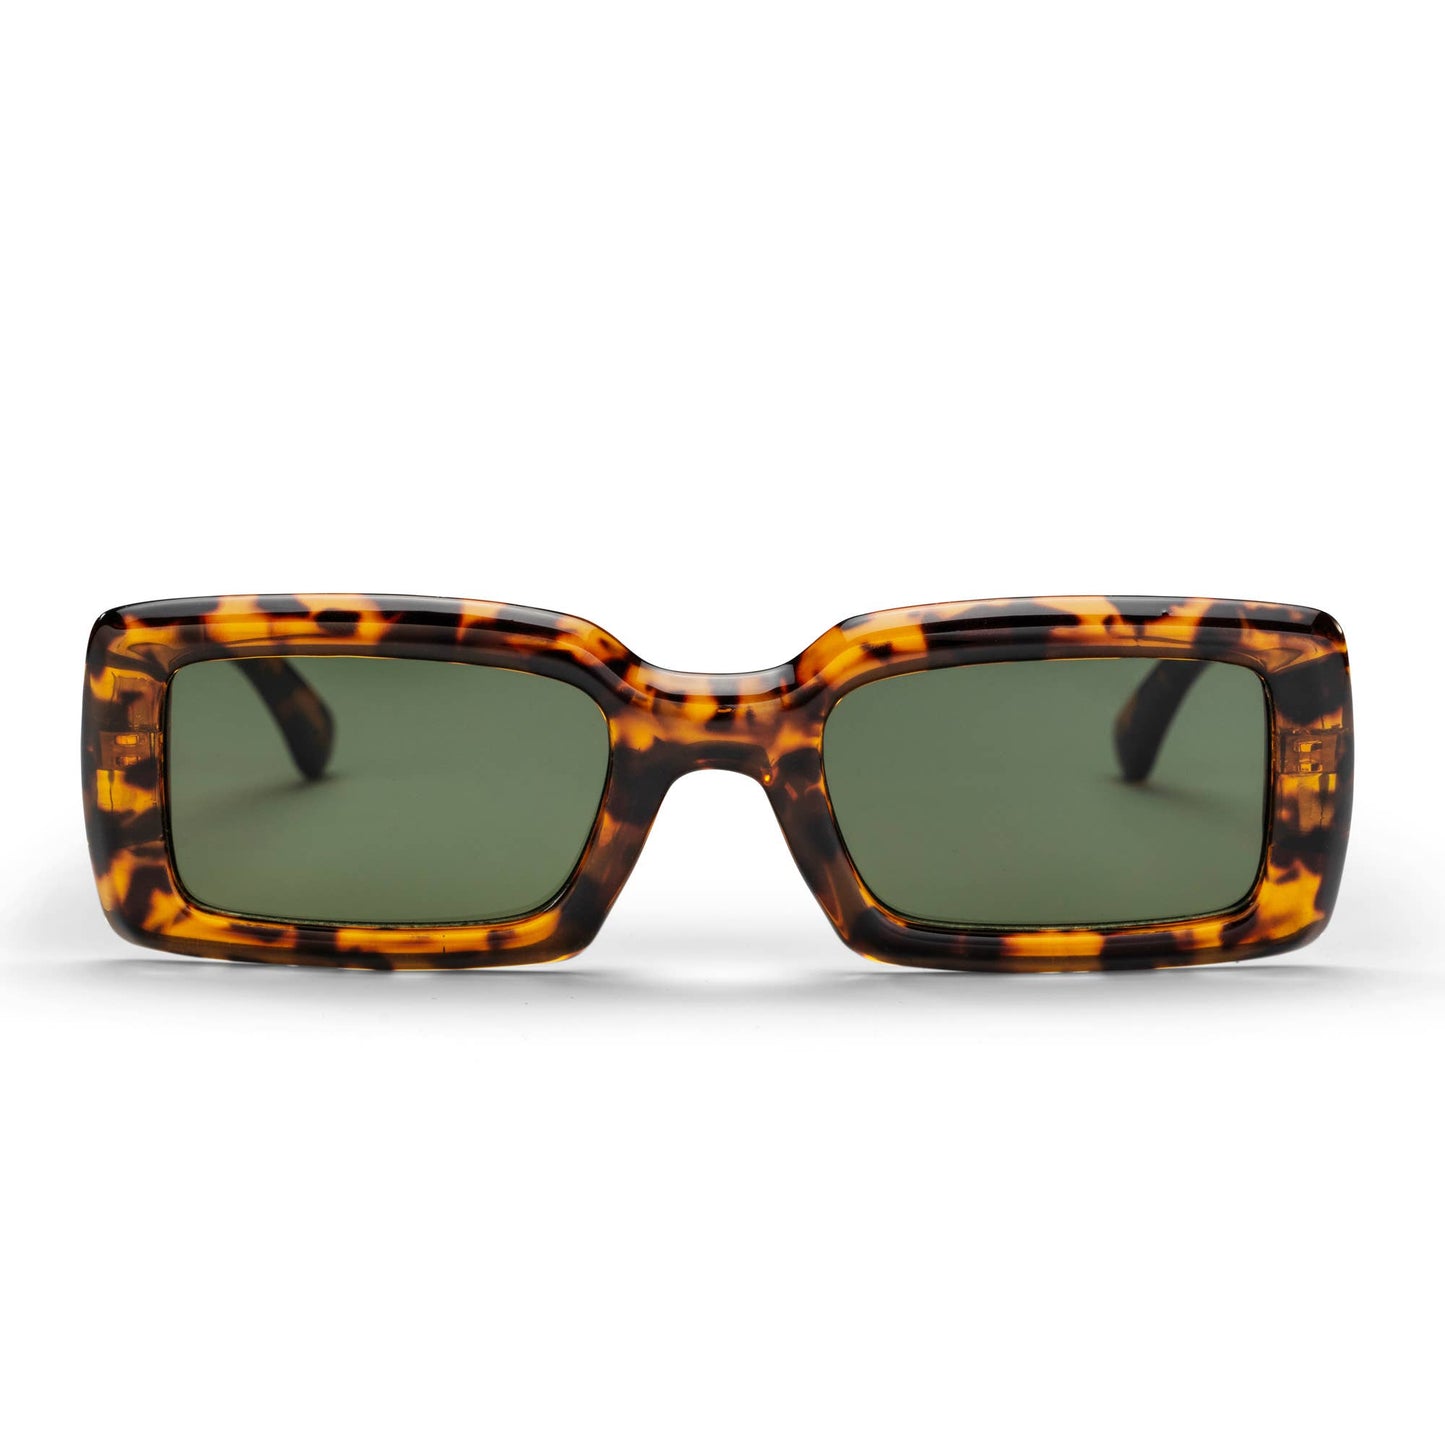 TOVE recycled plastic sunglasses leopard